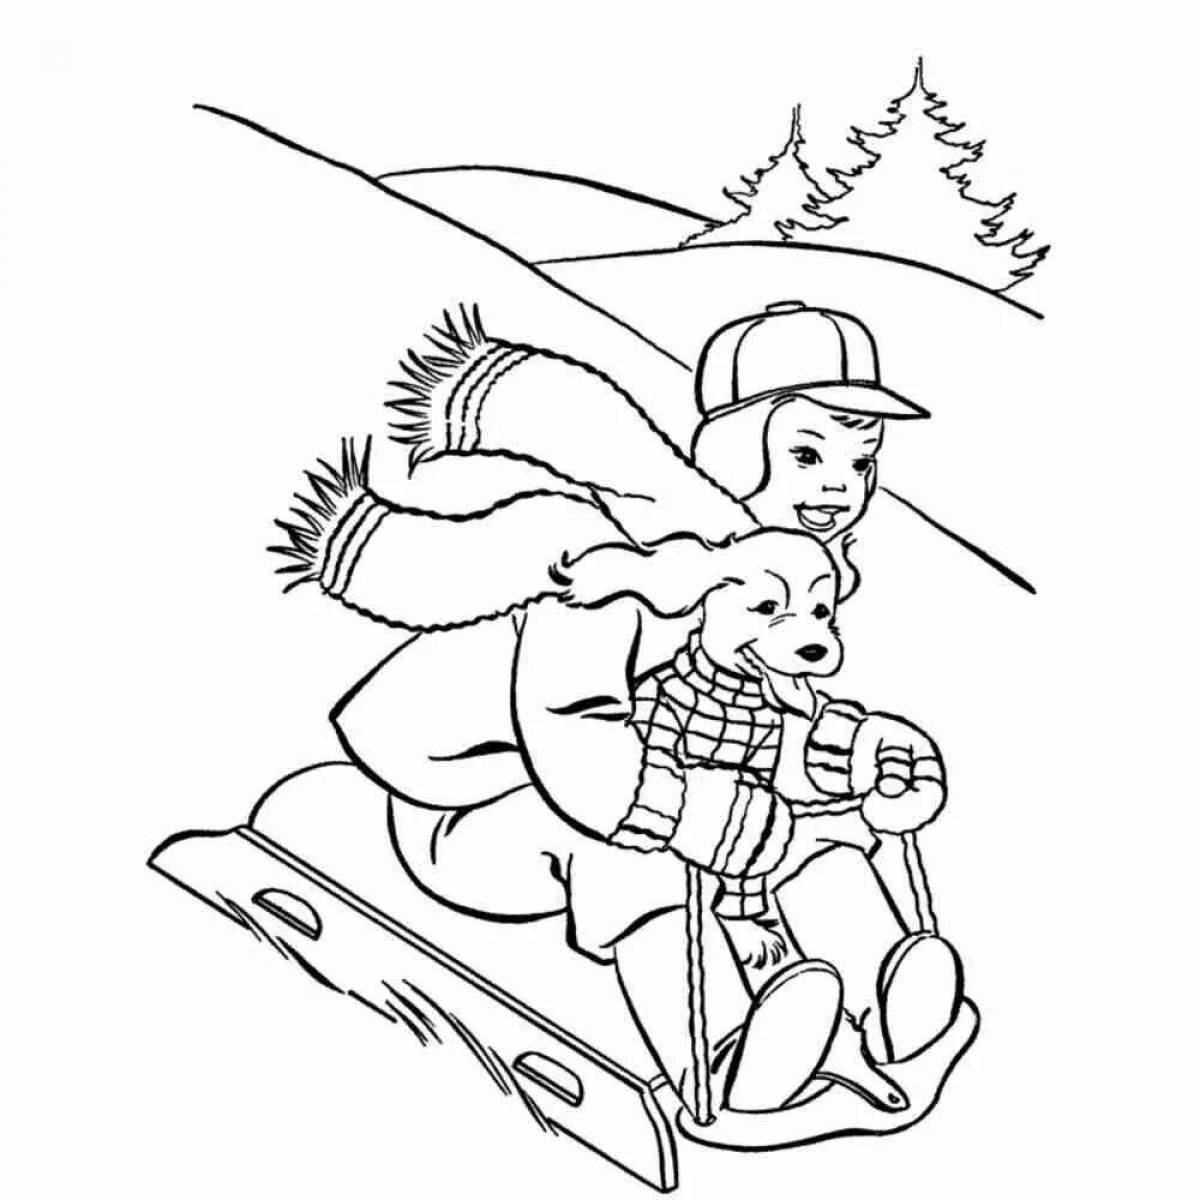 Joyful children sledding down the mountain